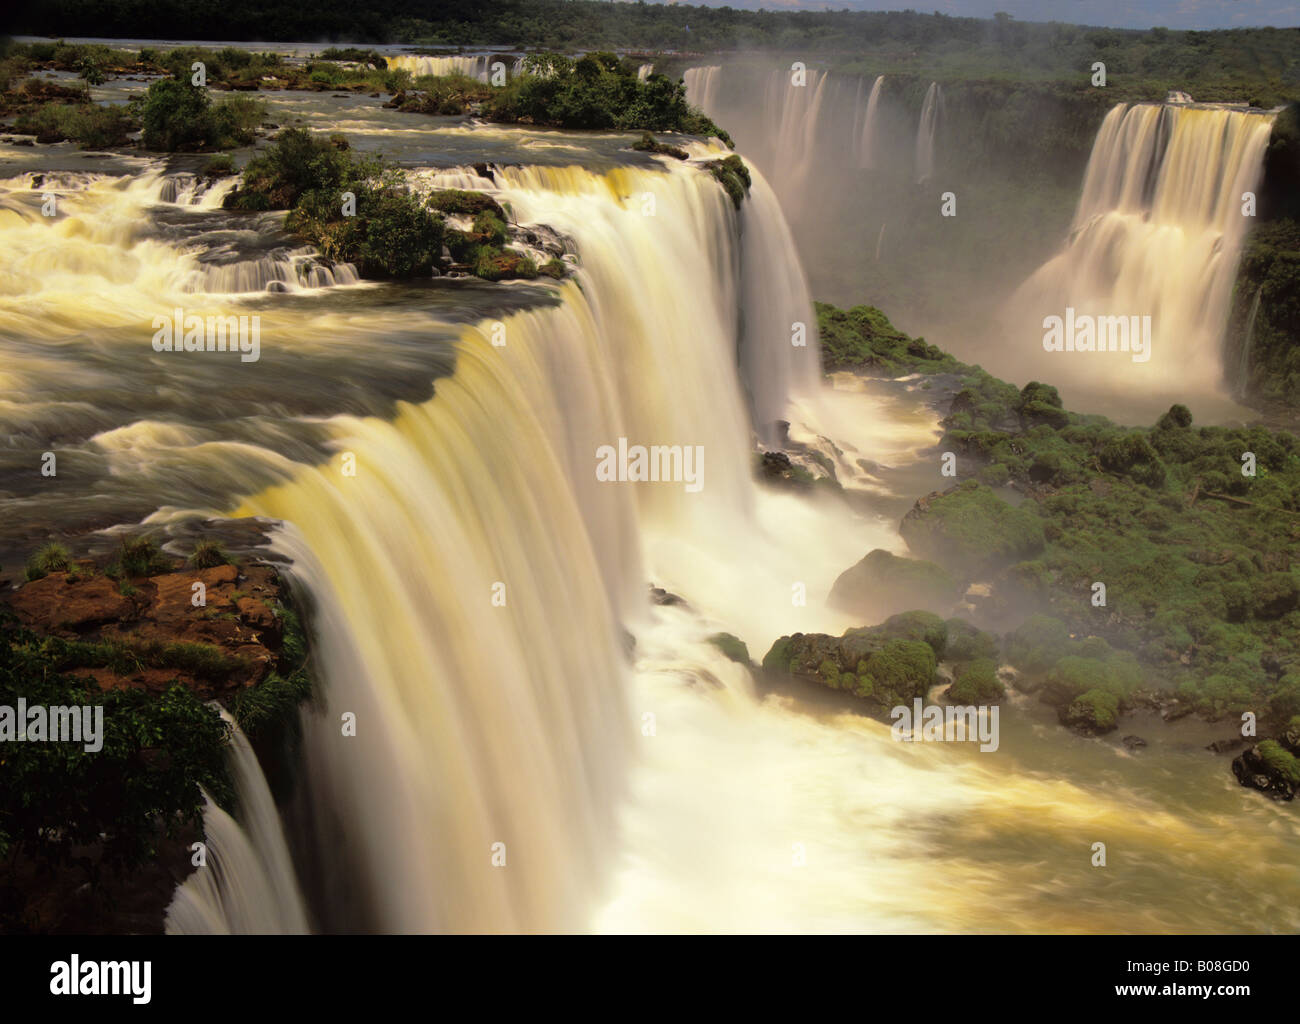 South America, Brazil, Igwacu Falls, Igwazu Falls. Towering Igwacu Falls thunders into the Igwacu River. Stock Photo